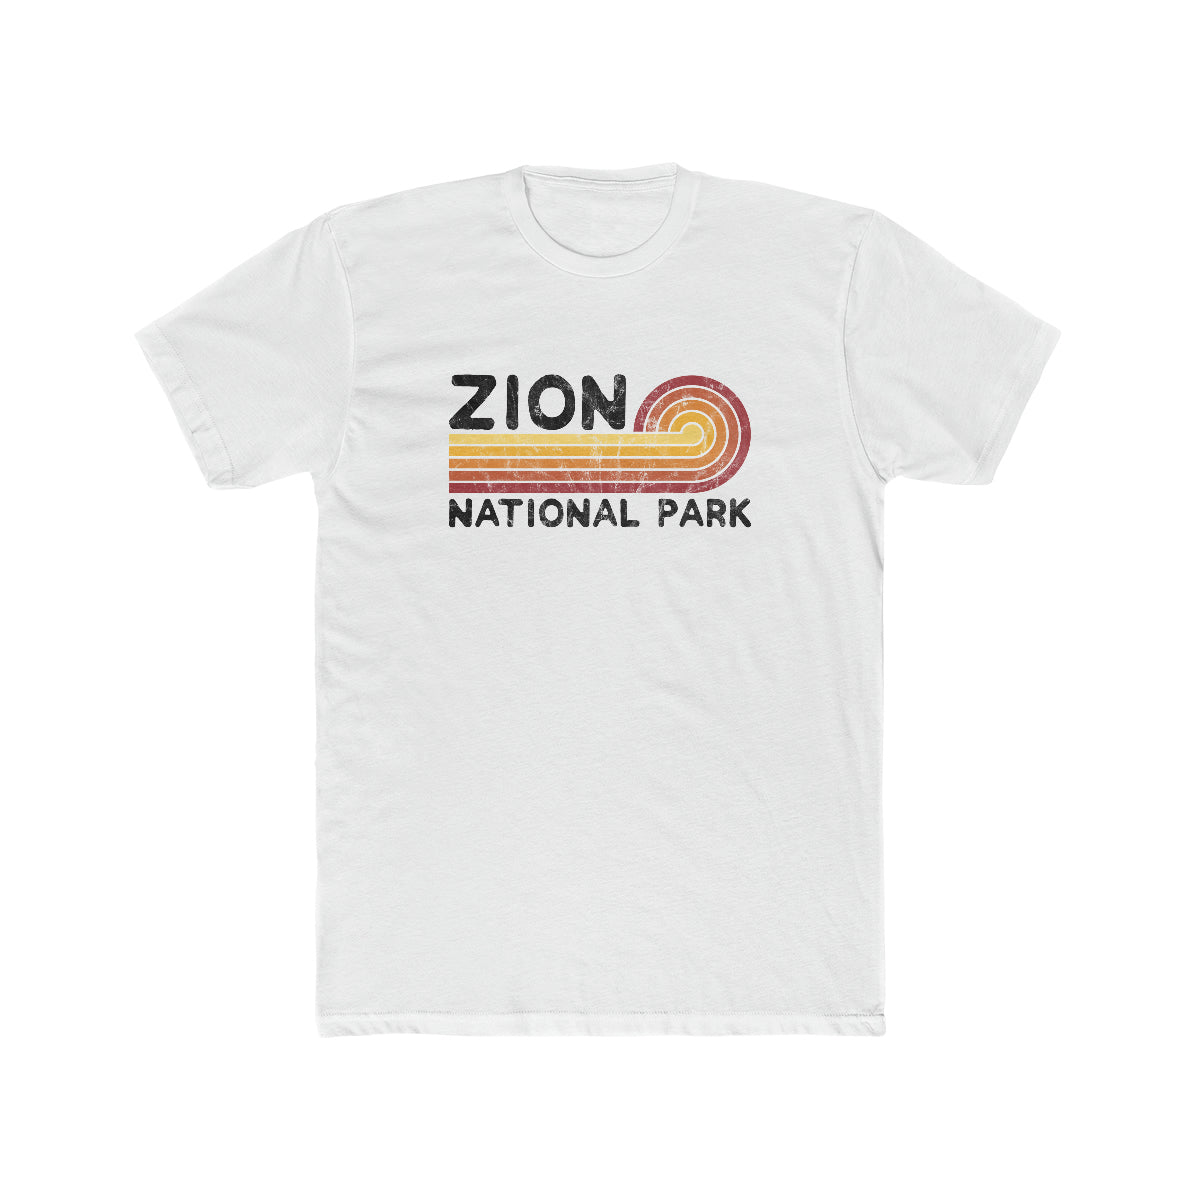 Zion National Park T-Shirt - Utah Desert Colors Stretched Sunrise